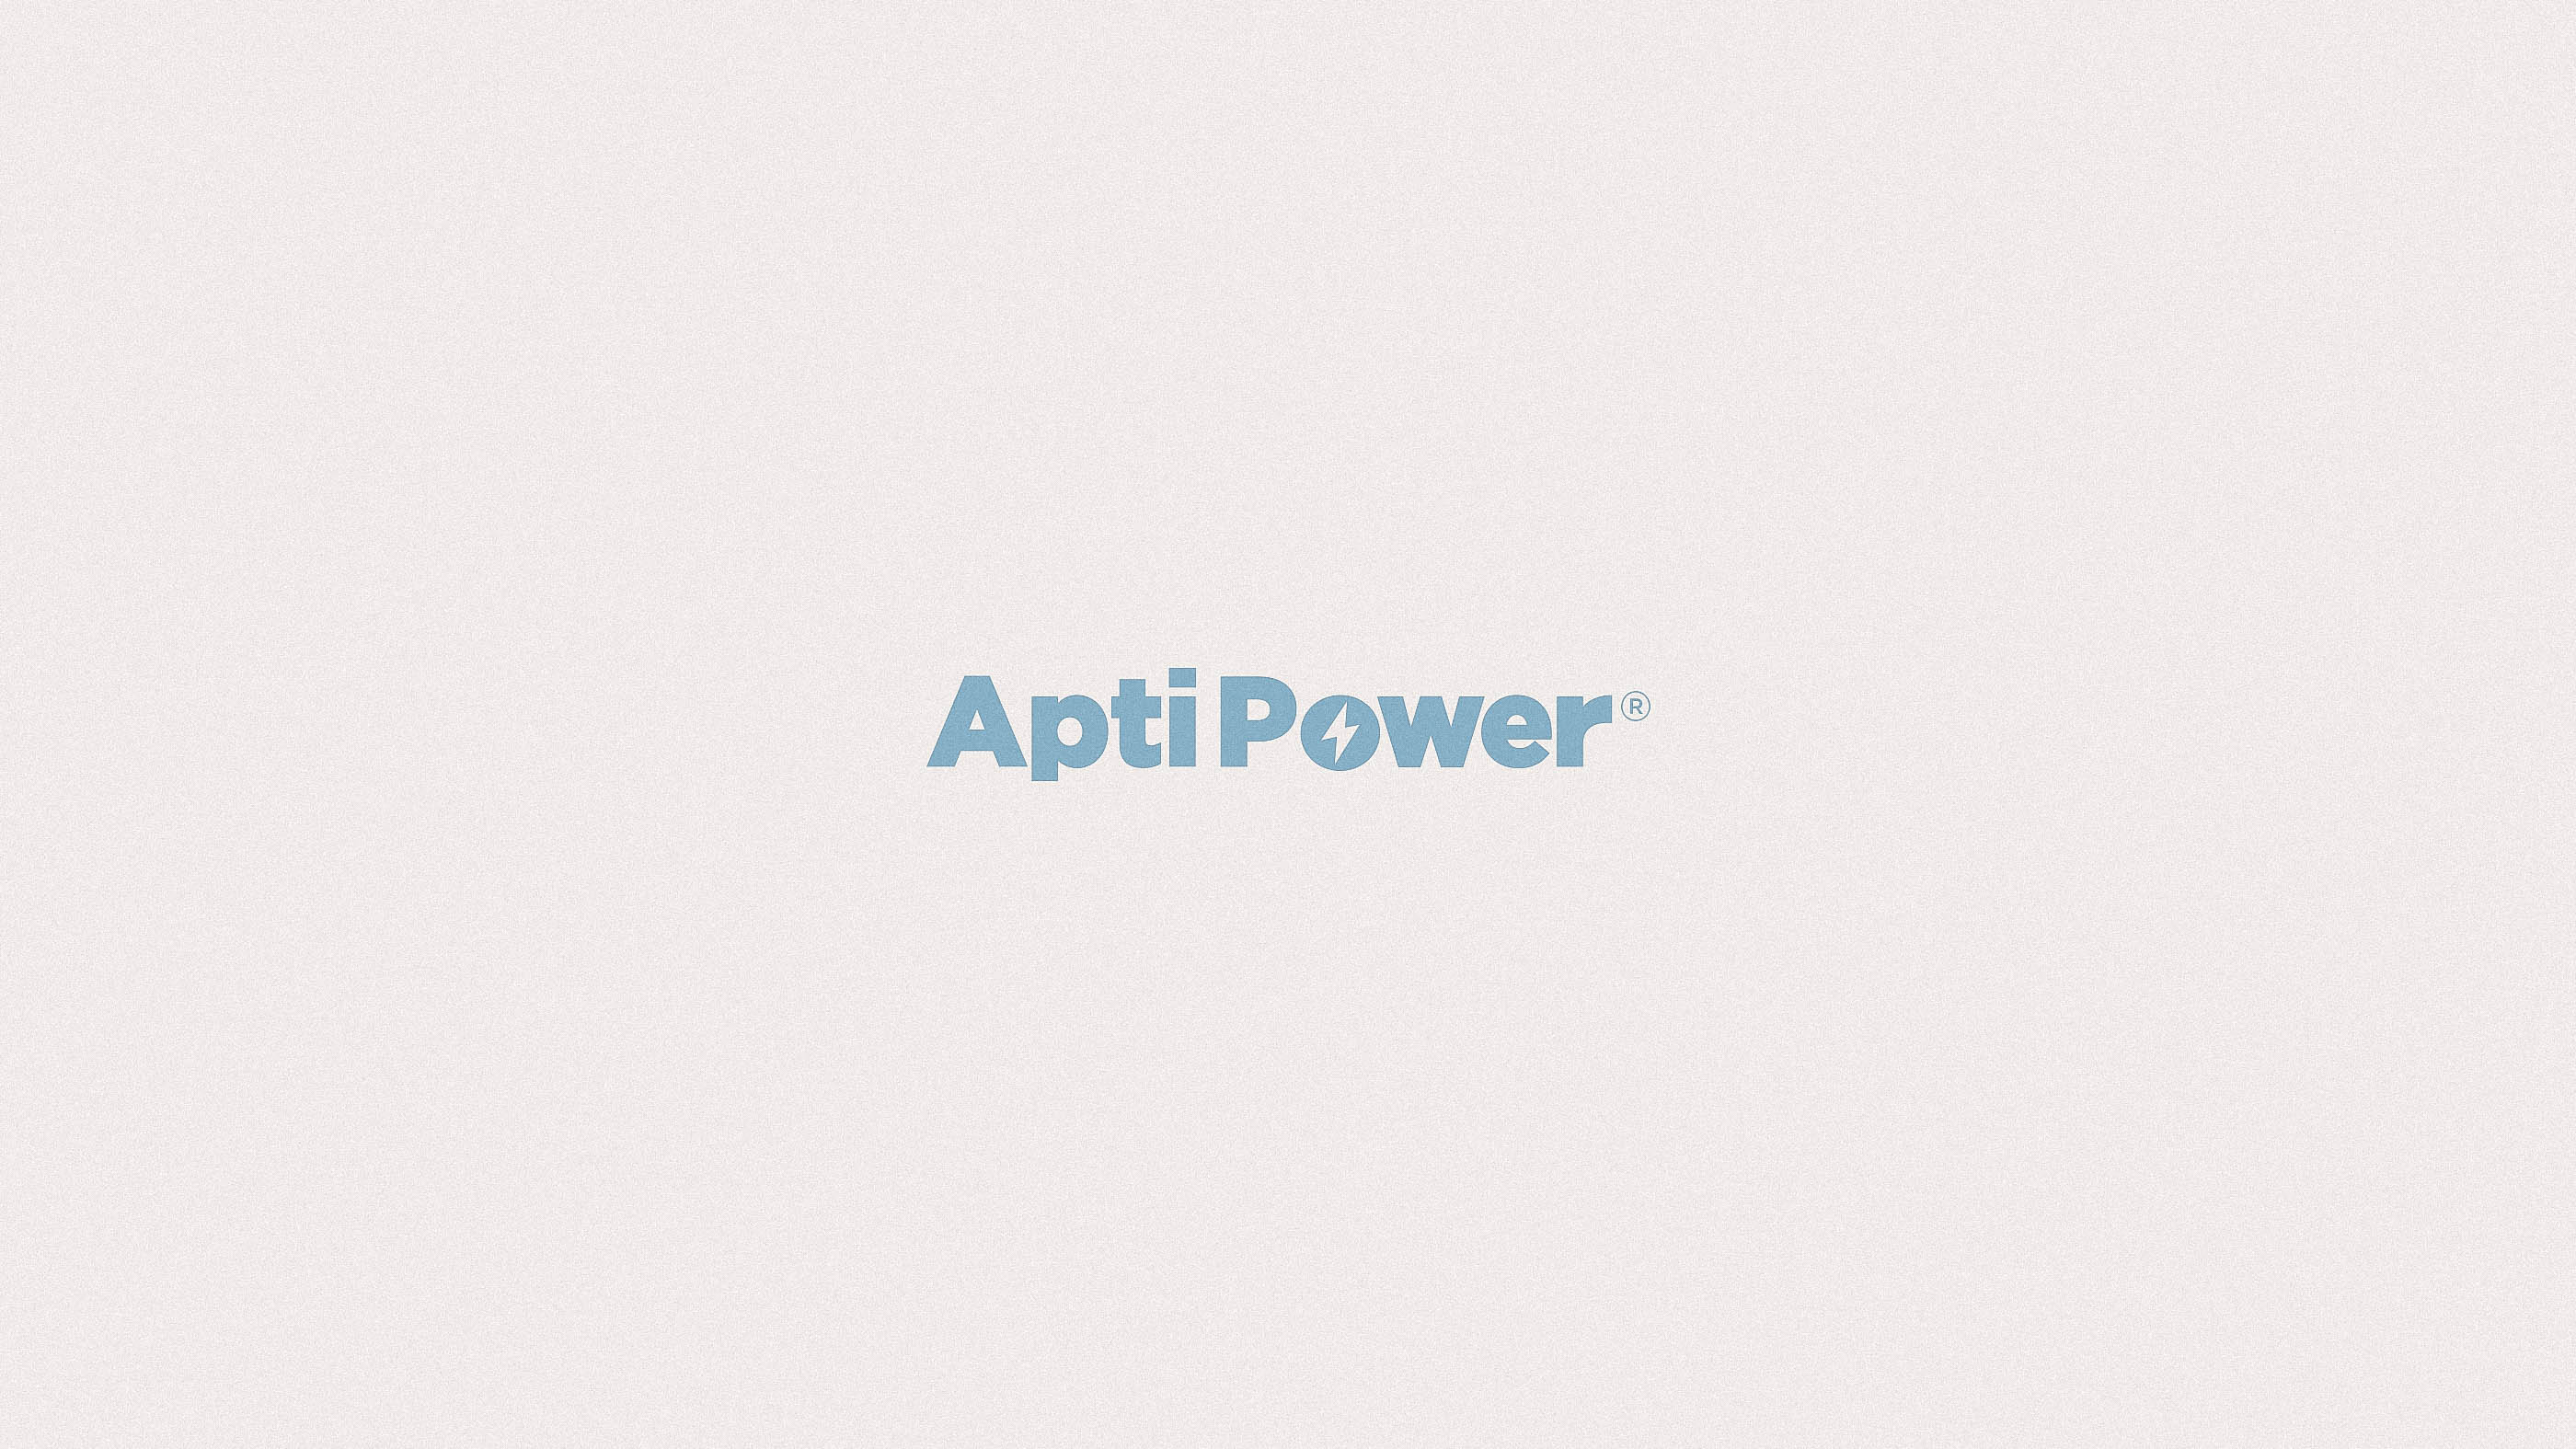 Apti Power Packaging Design by PSNDesign and Xok Branding